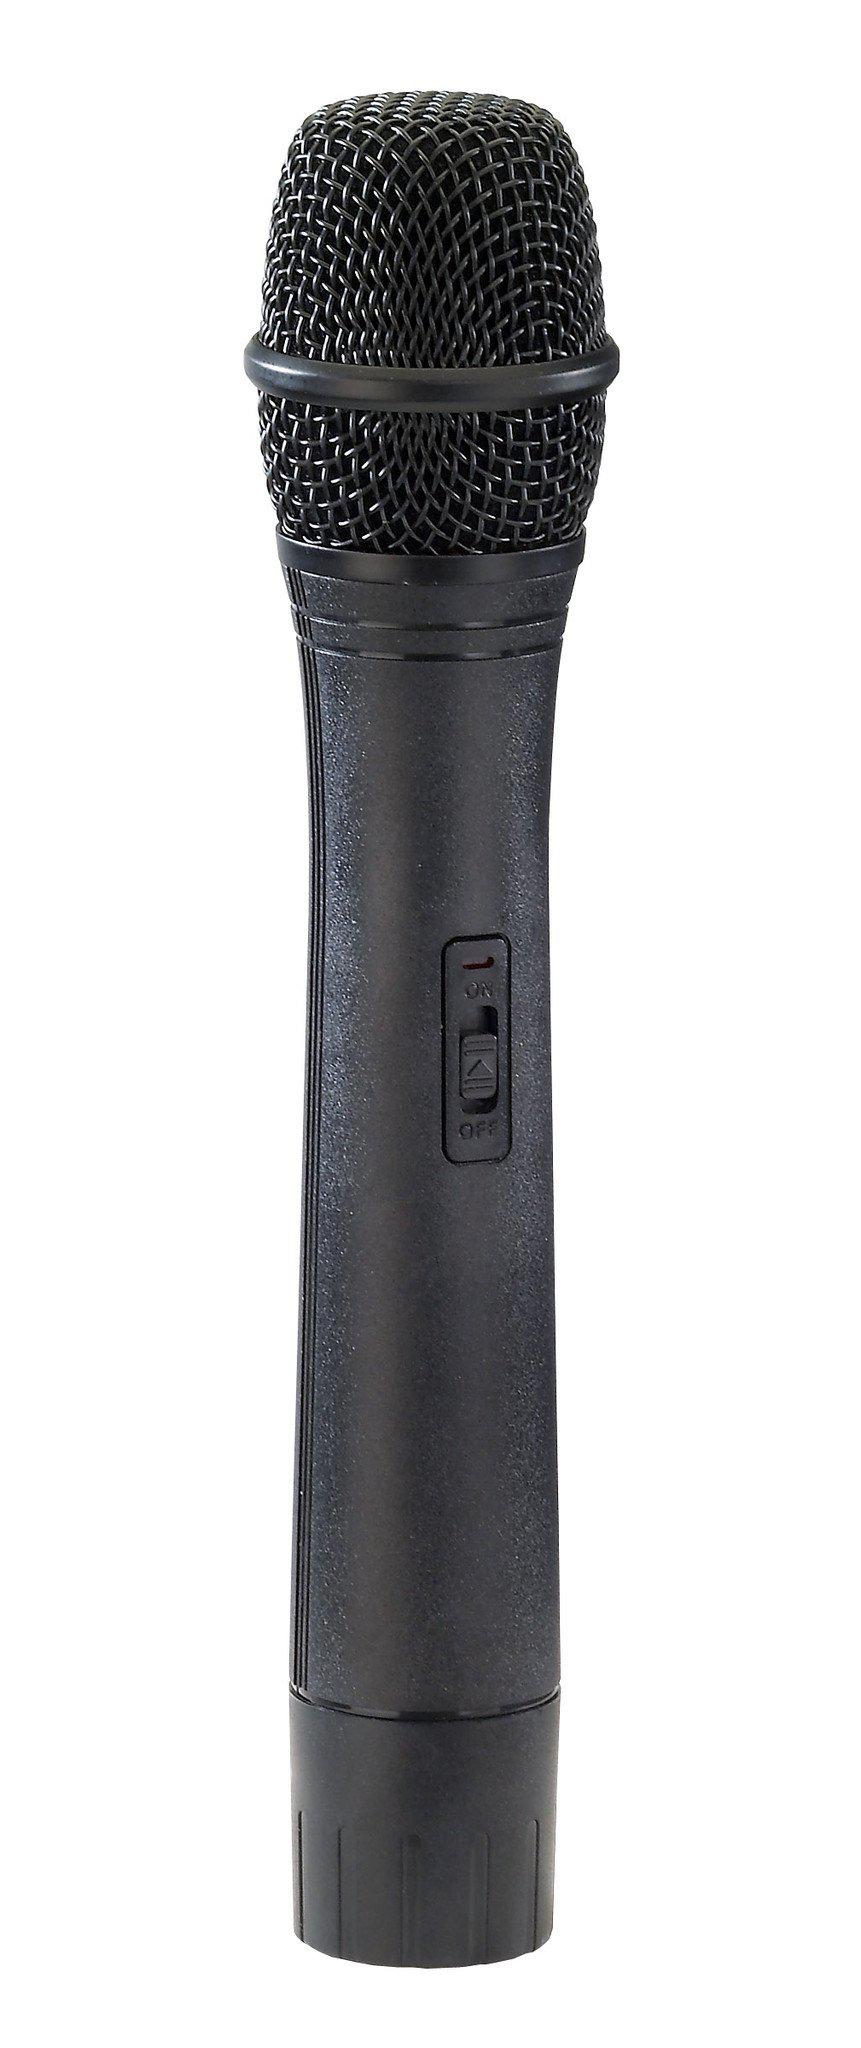 Oklahoma Sound Wireless Microphone Handheld-Wireless Microphones and Lights, Podium and Lectern Options-Podiums Direct